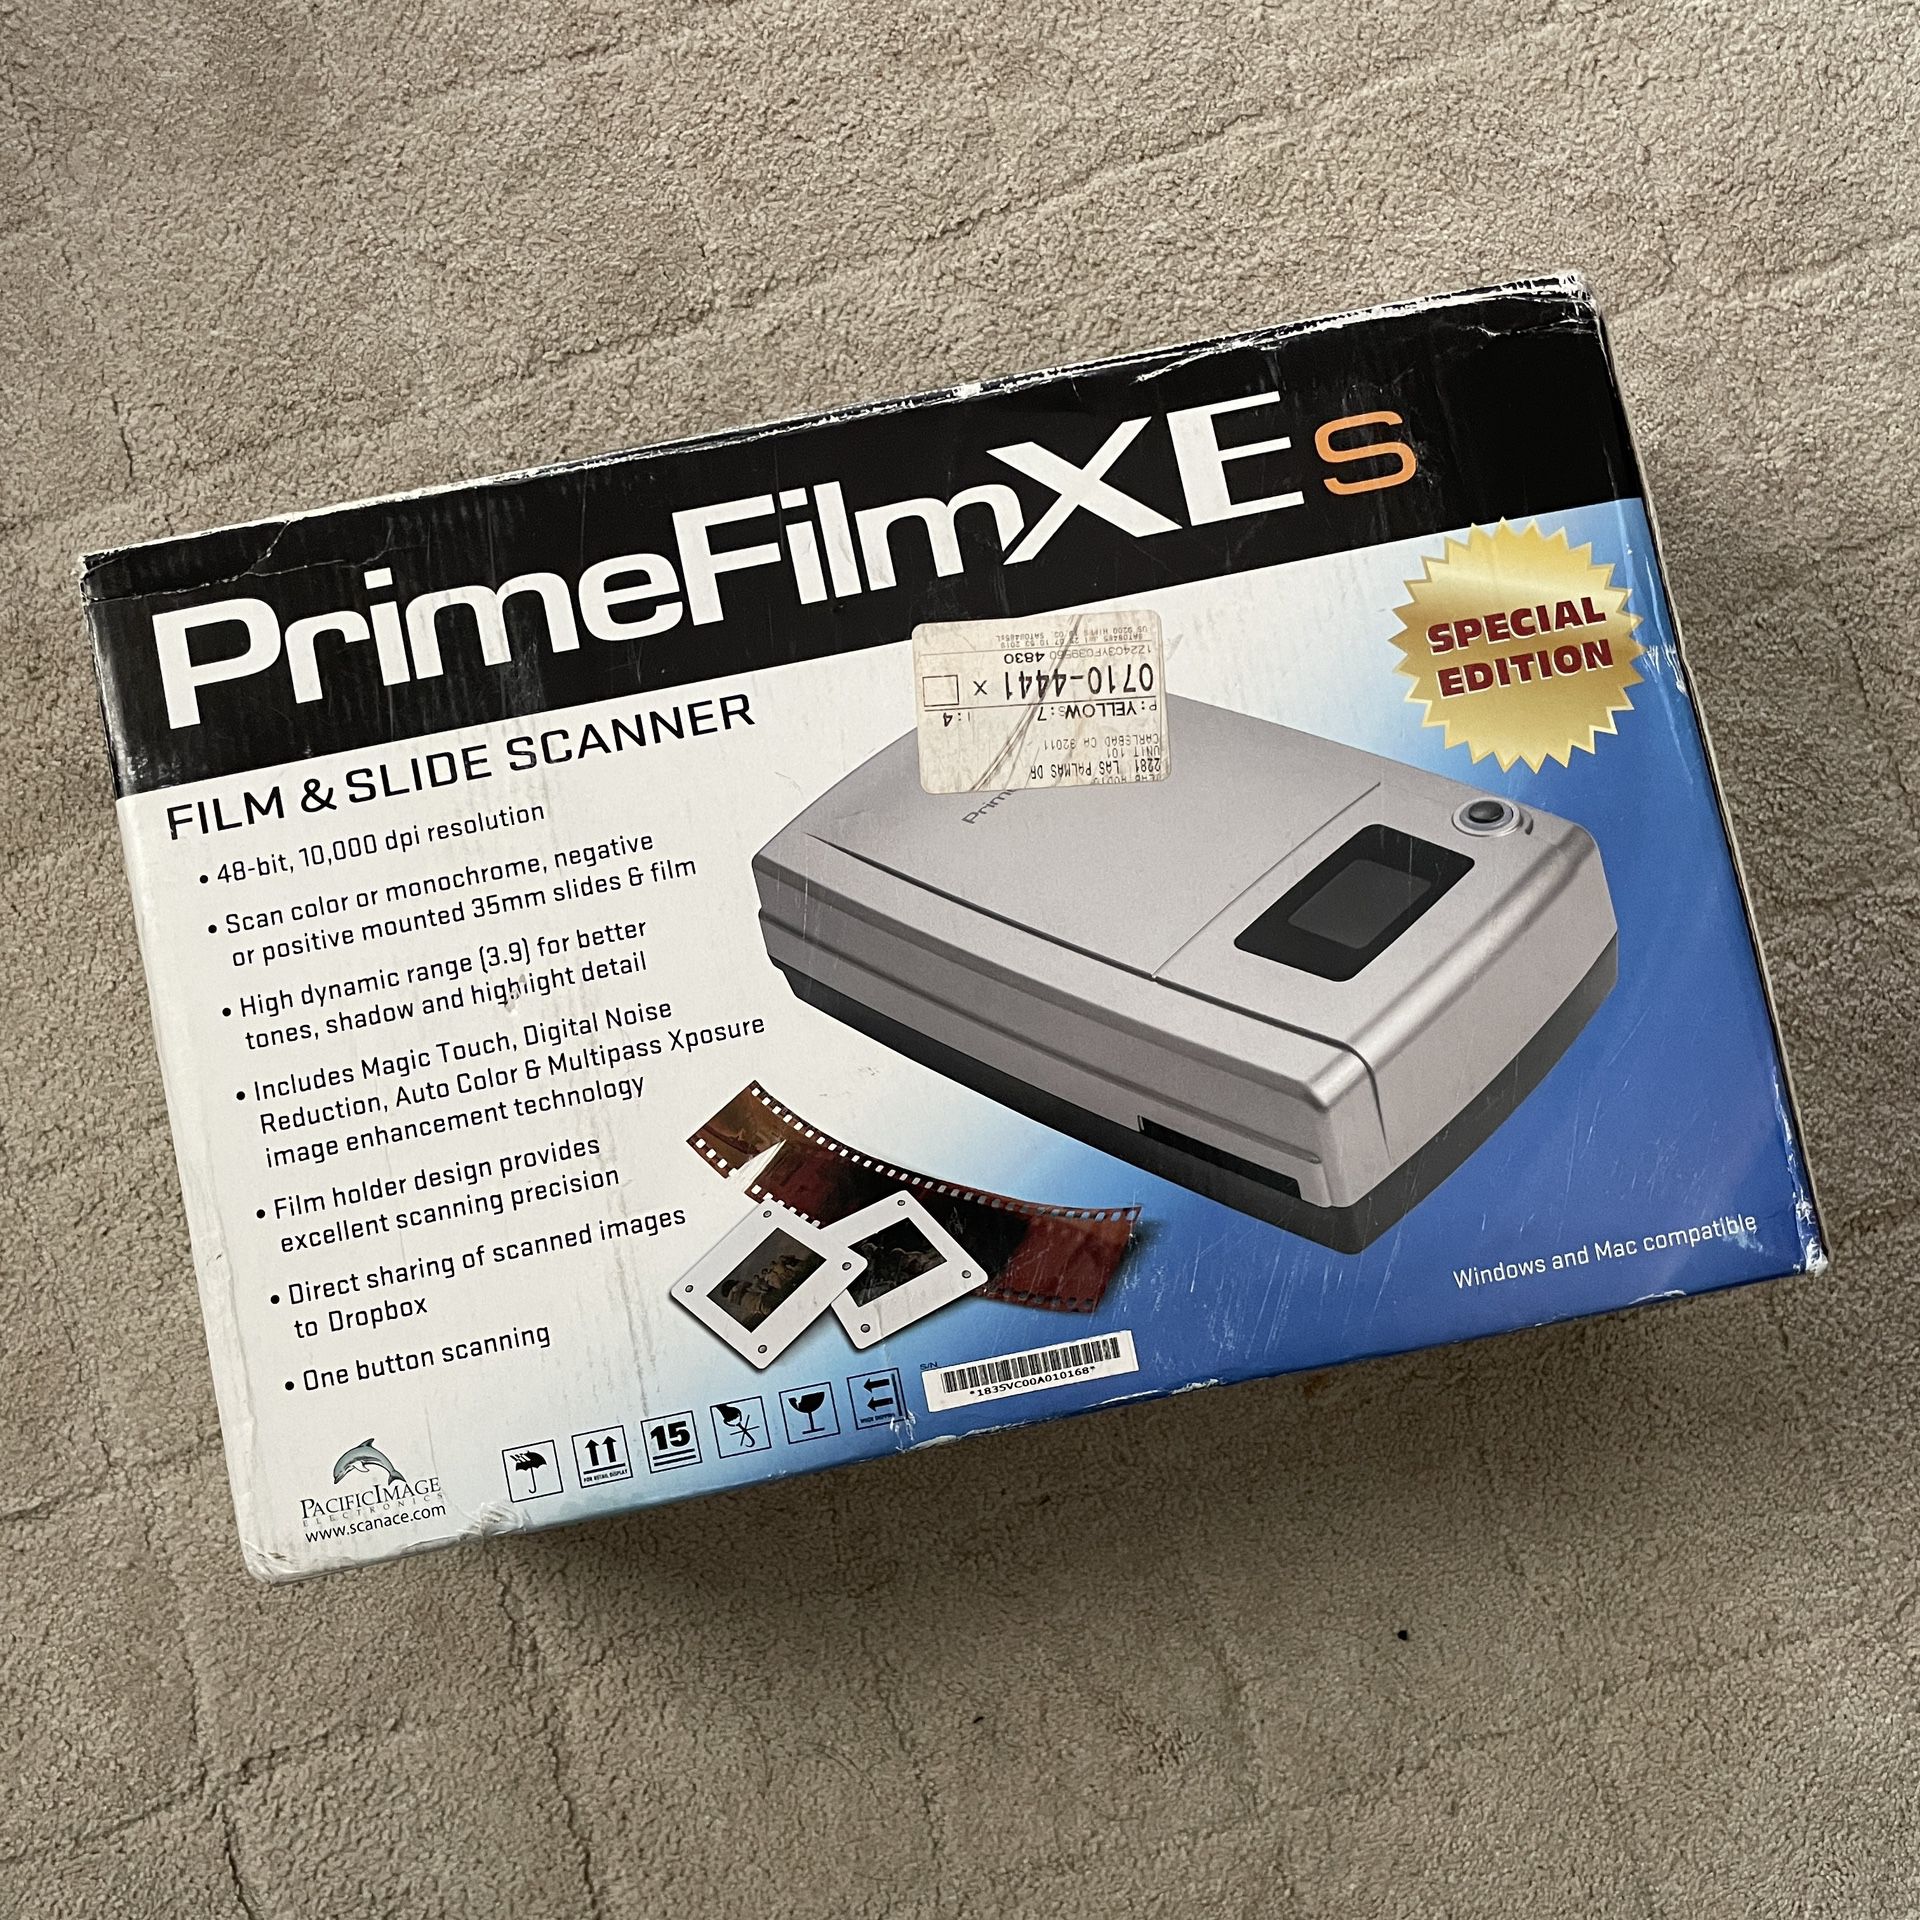 PrimeFilm XEs 35mm Film And Slide Scanner